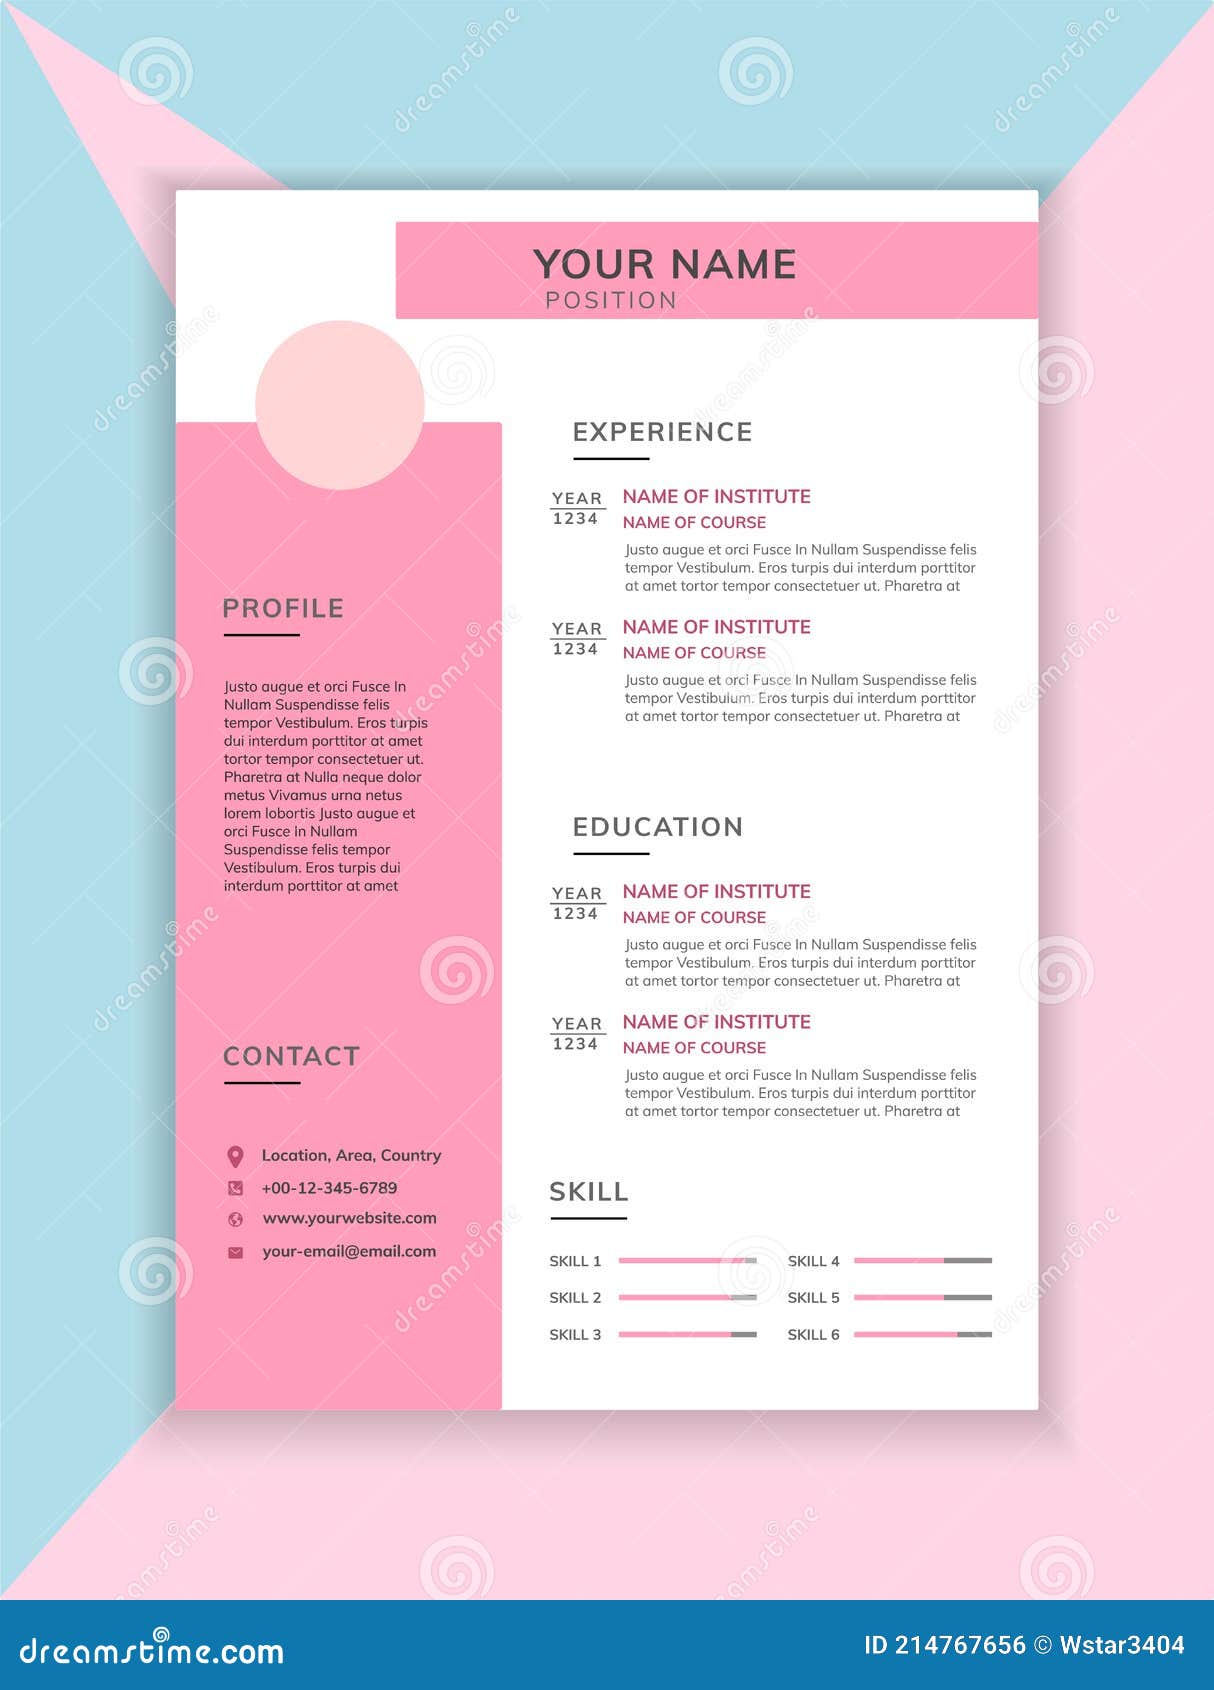 feminine-resume-cv-template-in-pink-color-stock-vector-illustration